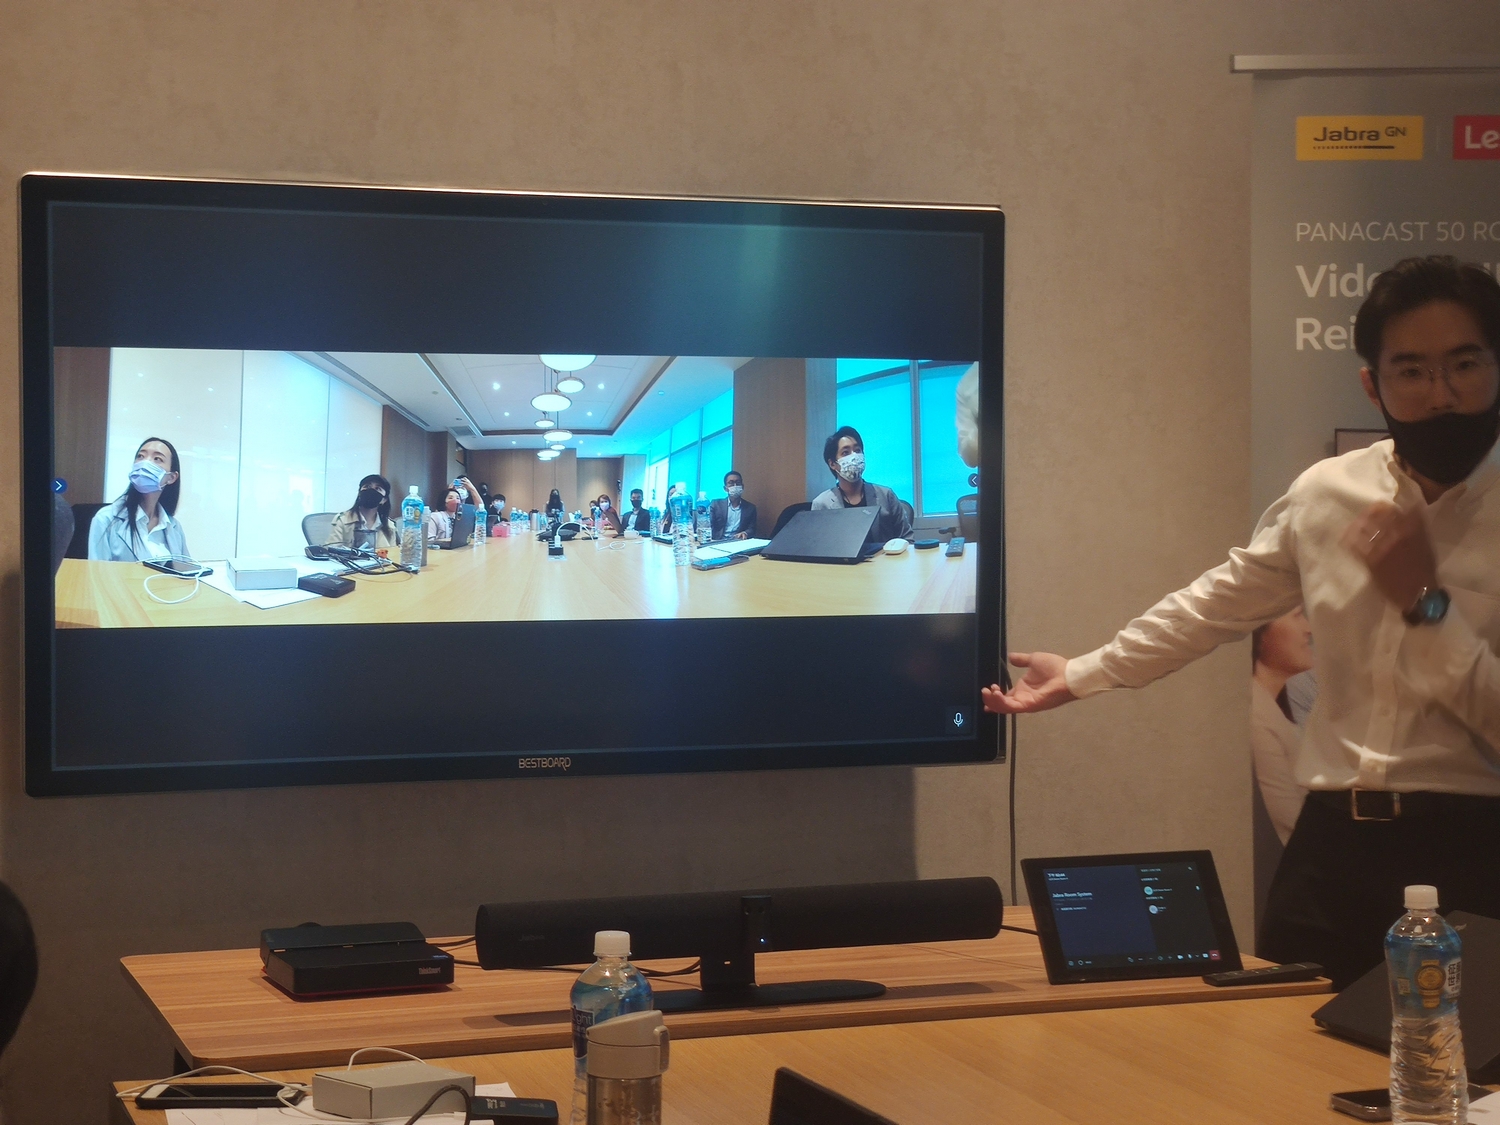 【Jabra】PanaCast50超廣角會議視訊，180°全景會議、串流白板、頭像特寫，打造Microsoft Teams會議室系統。 - 視訊攝影機 - 敗家達人推薦